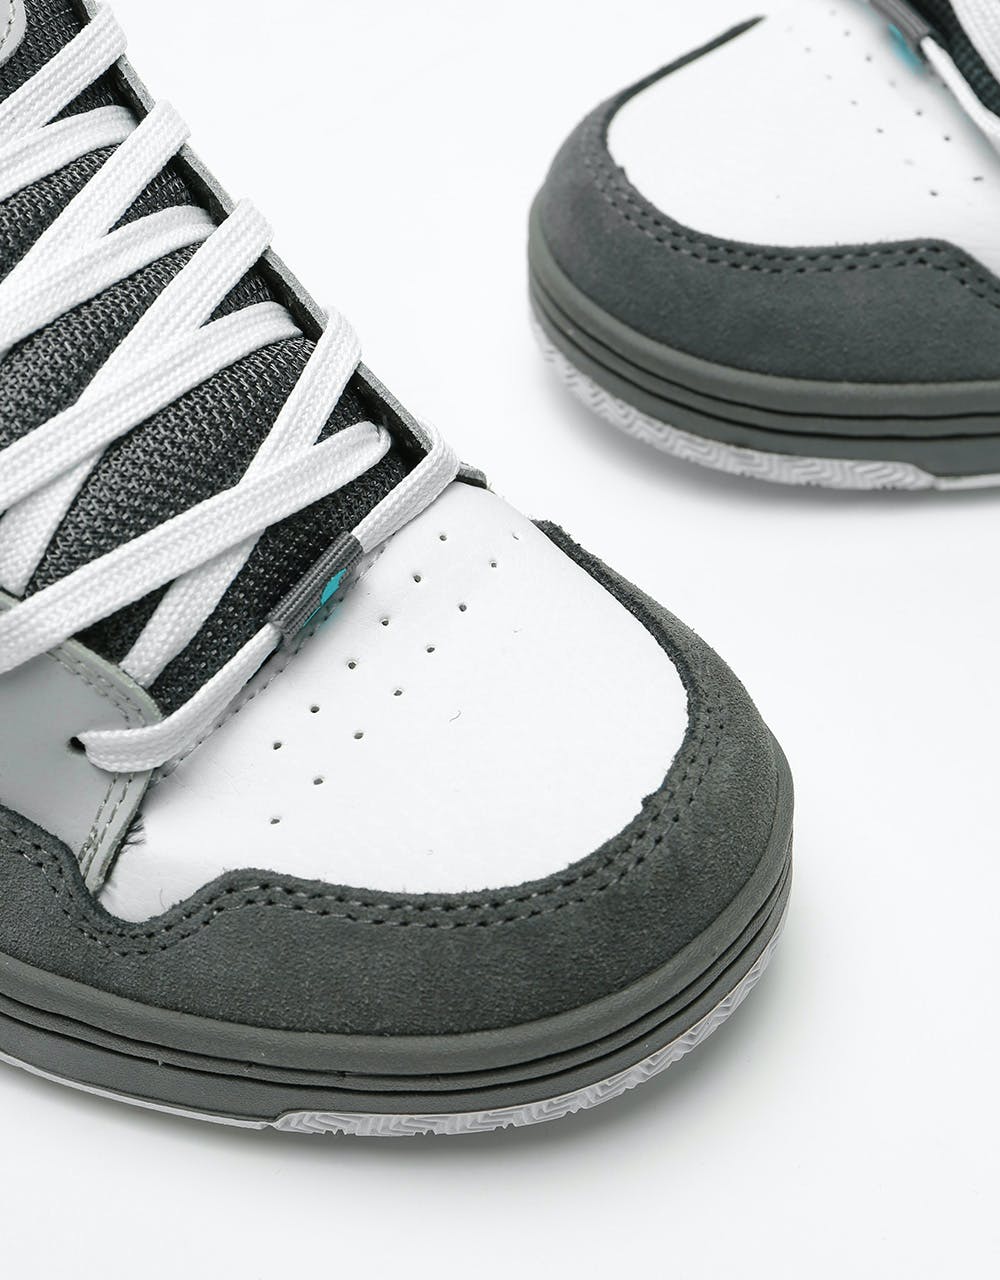 DVS Enduro 125 Skate Shoes - Black/Grey/White Nubuck